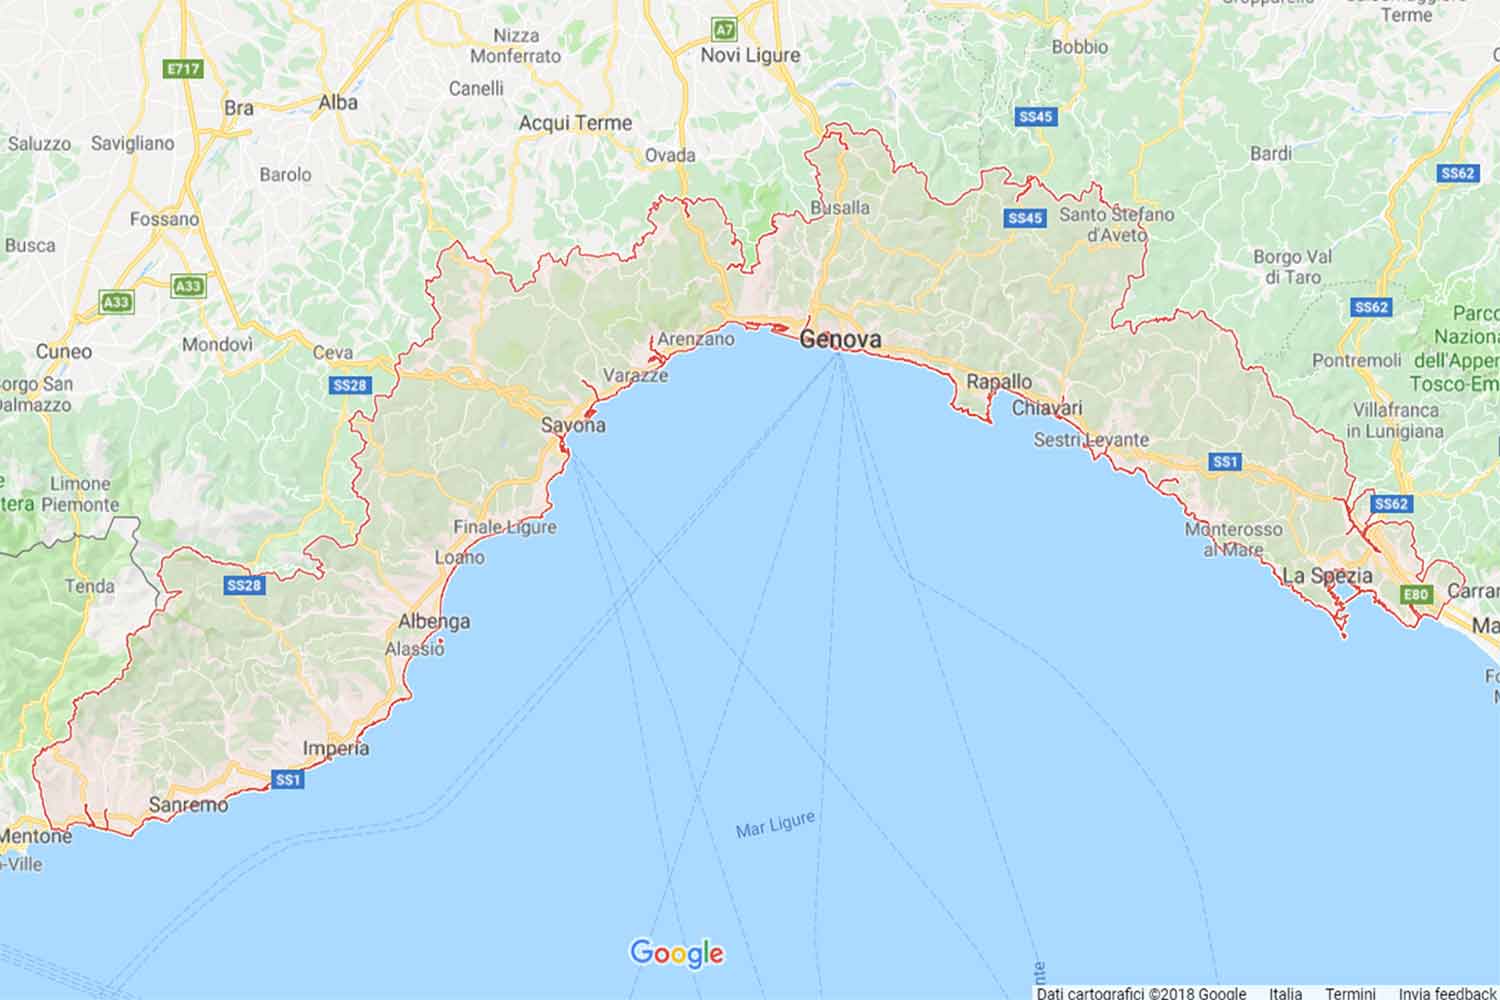 Liguria - Imperia - Caravonica Preventivi Veloci google maps